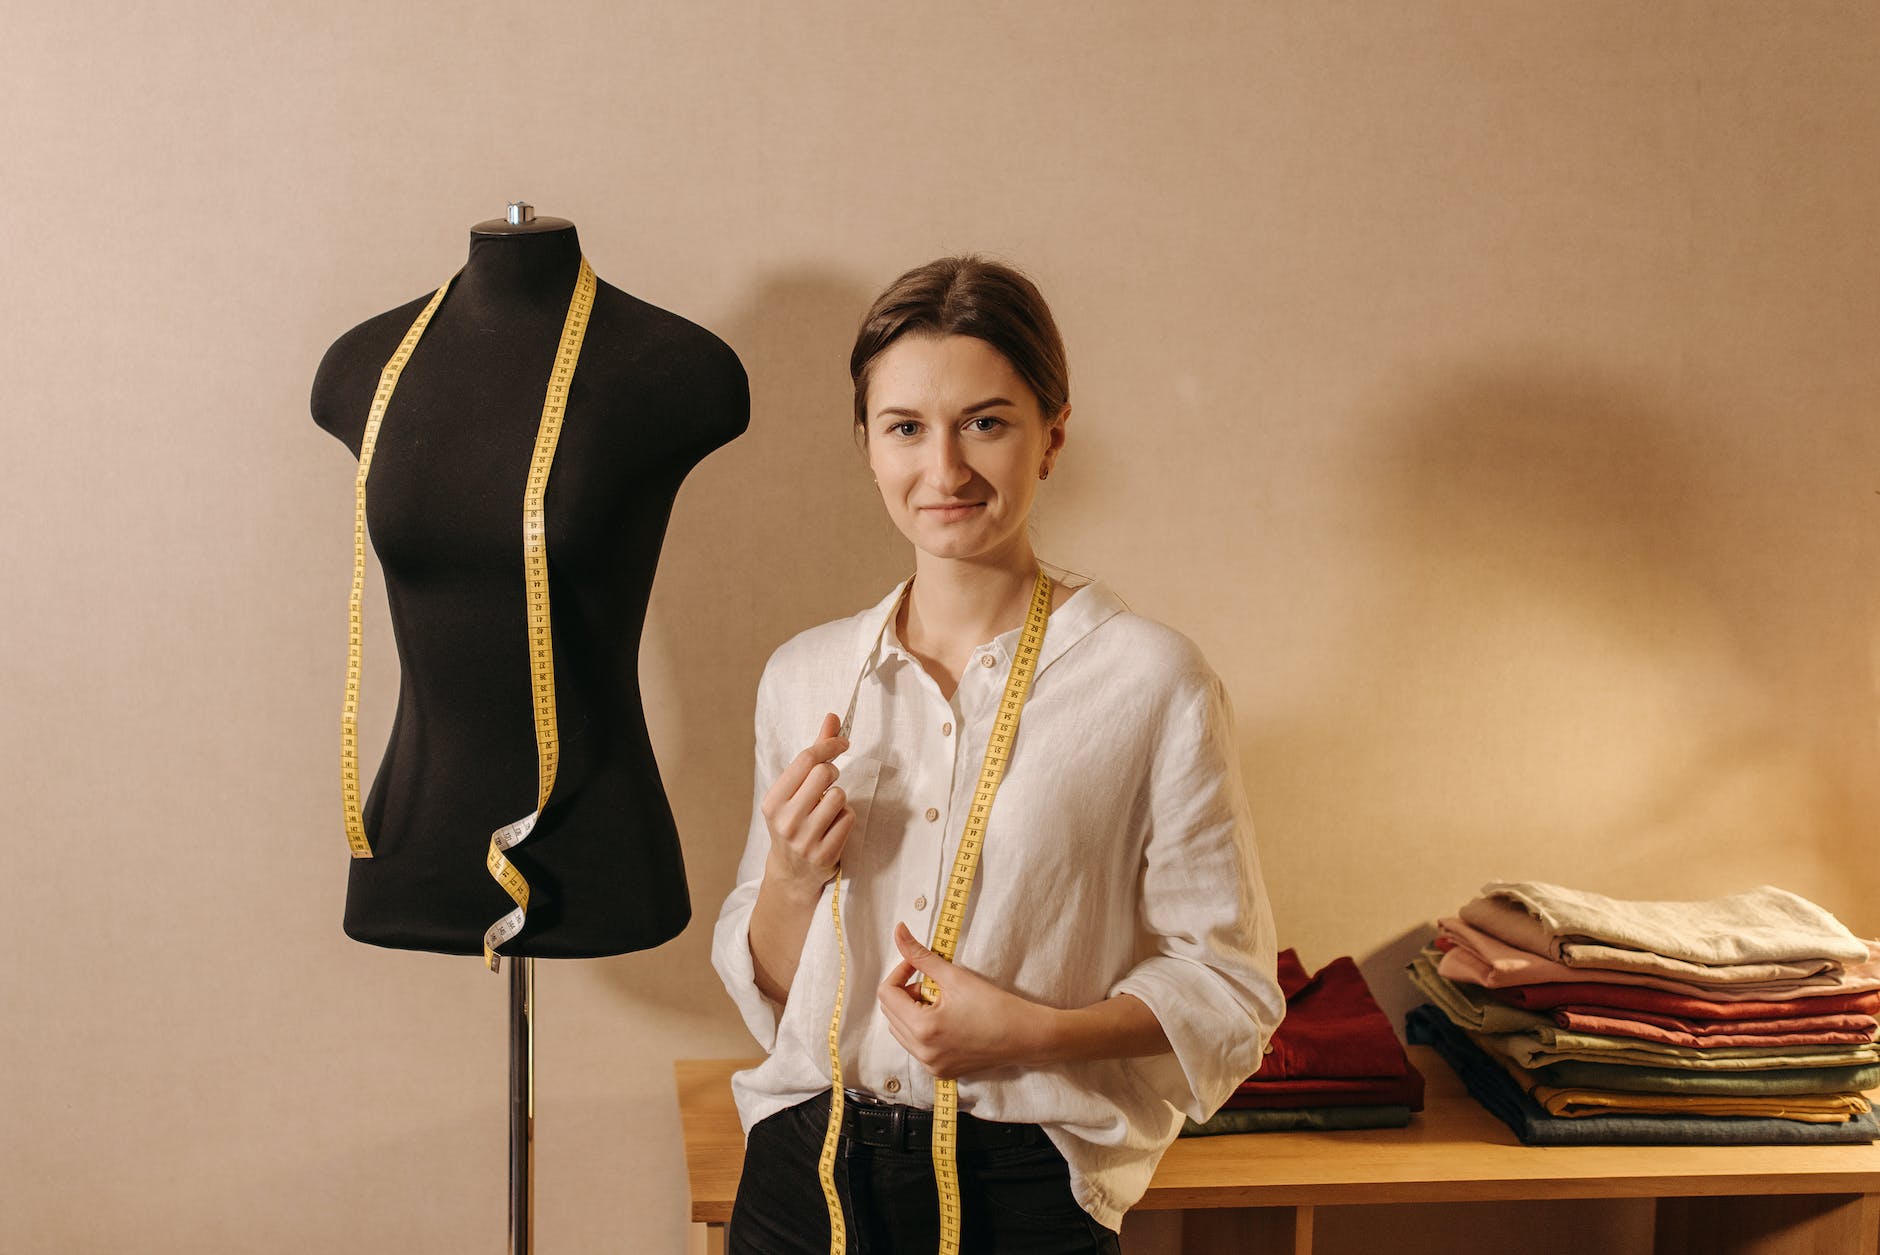 dressmaker smiling in white long sleeve blouse standing beside black manikin with measuring tape hanging on her neck